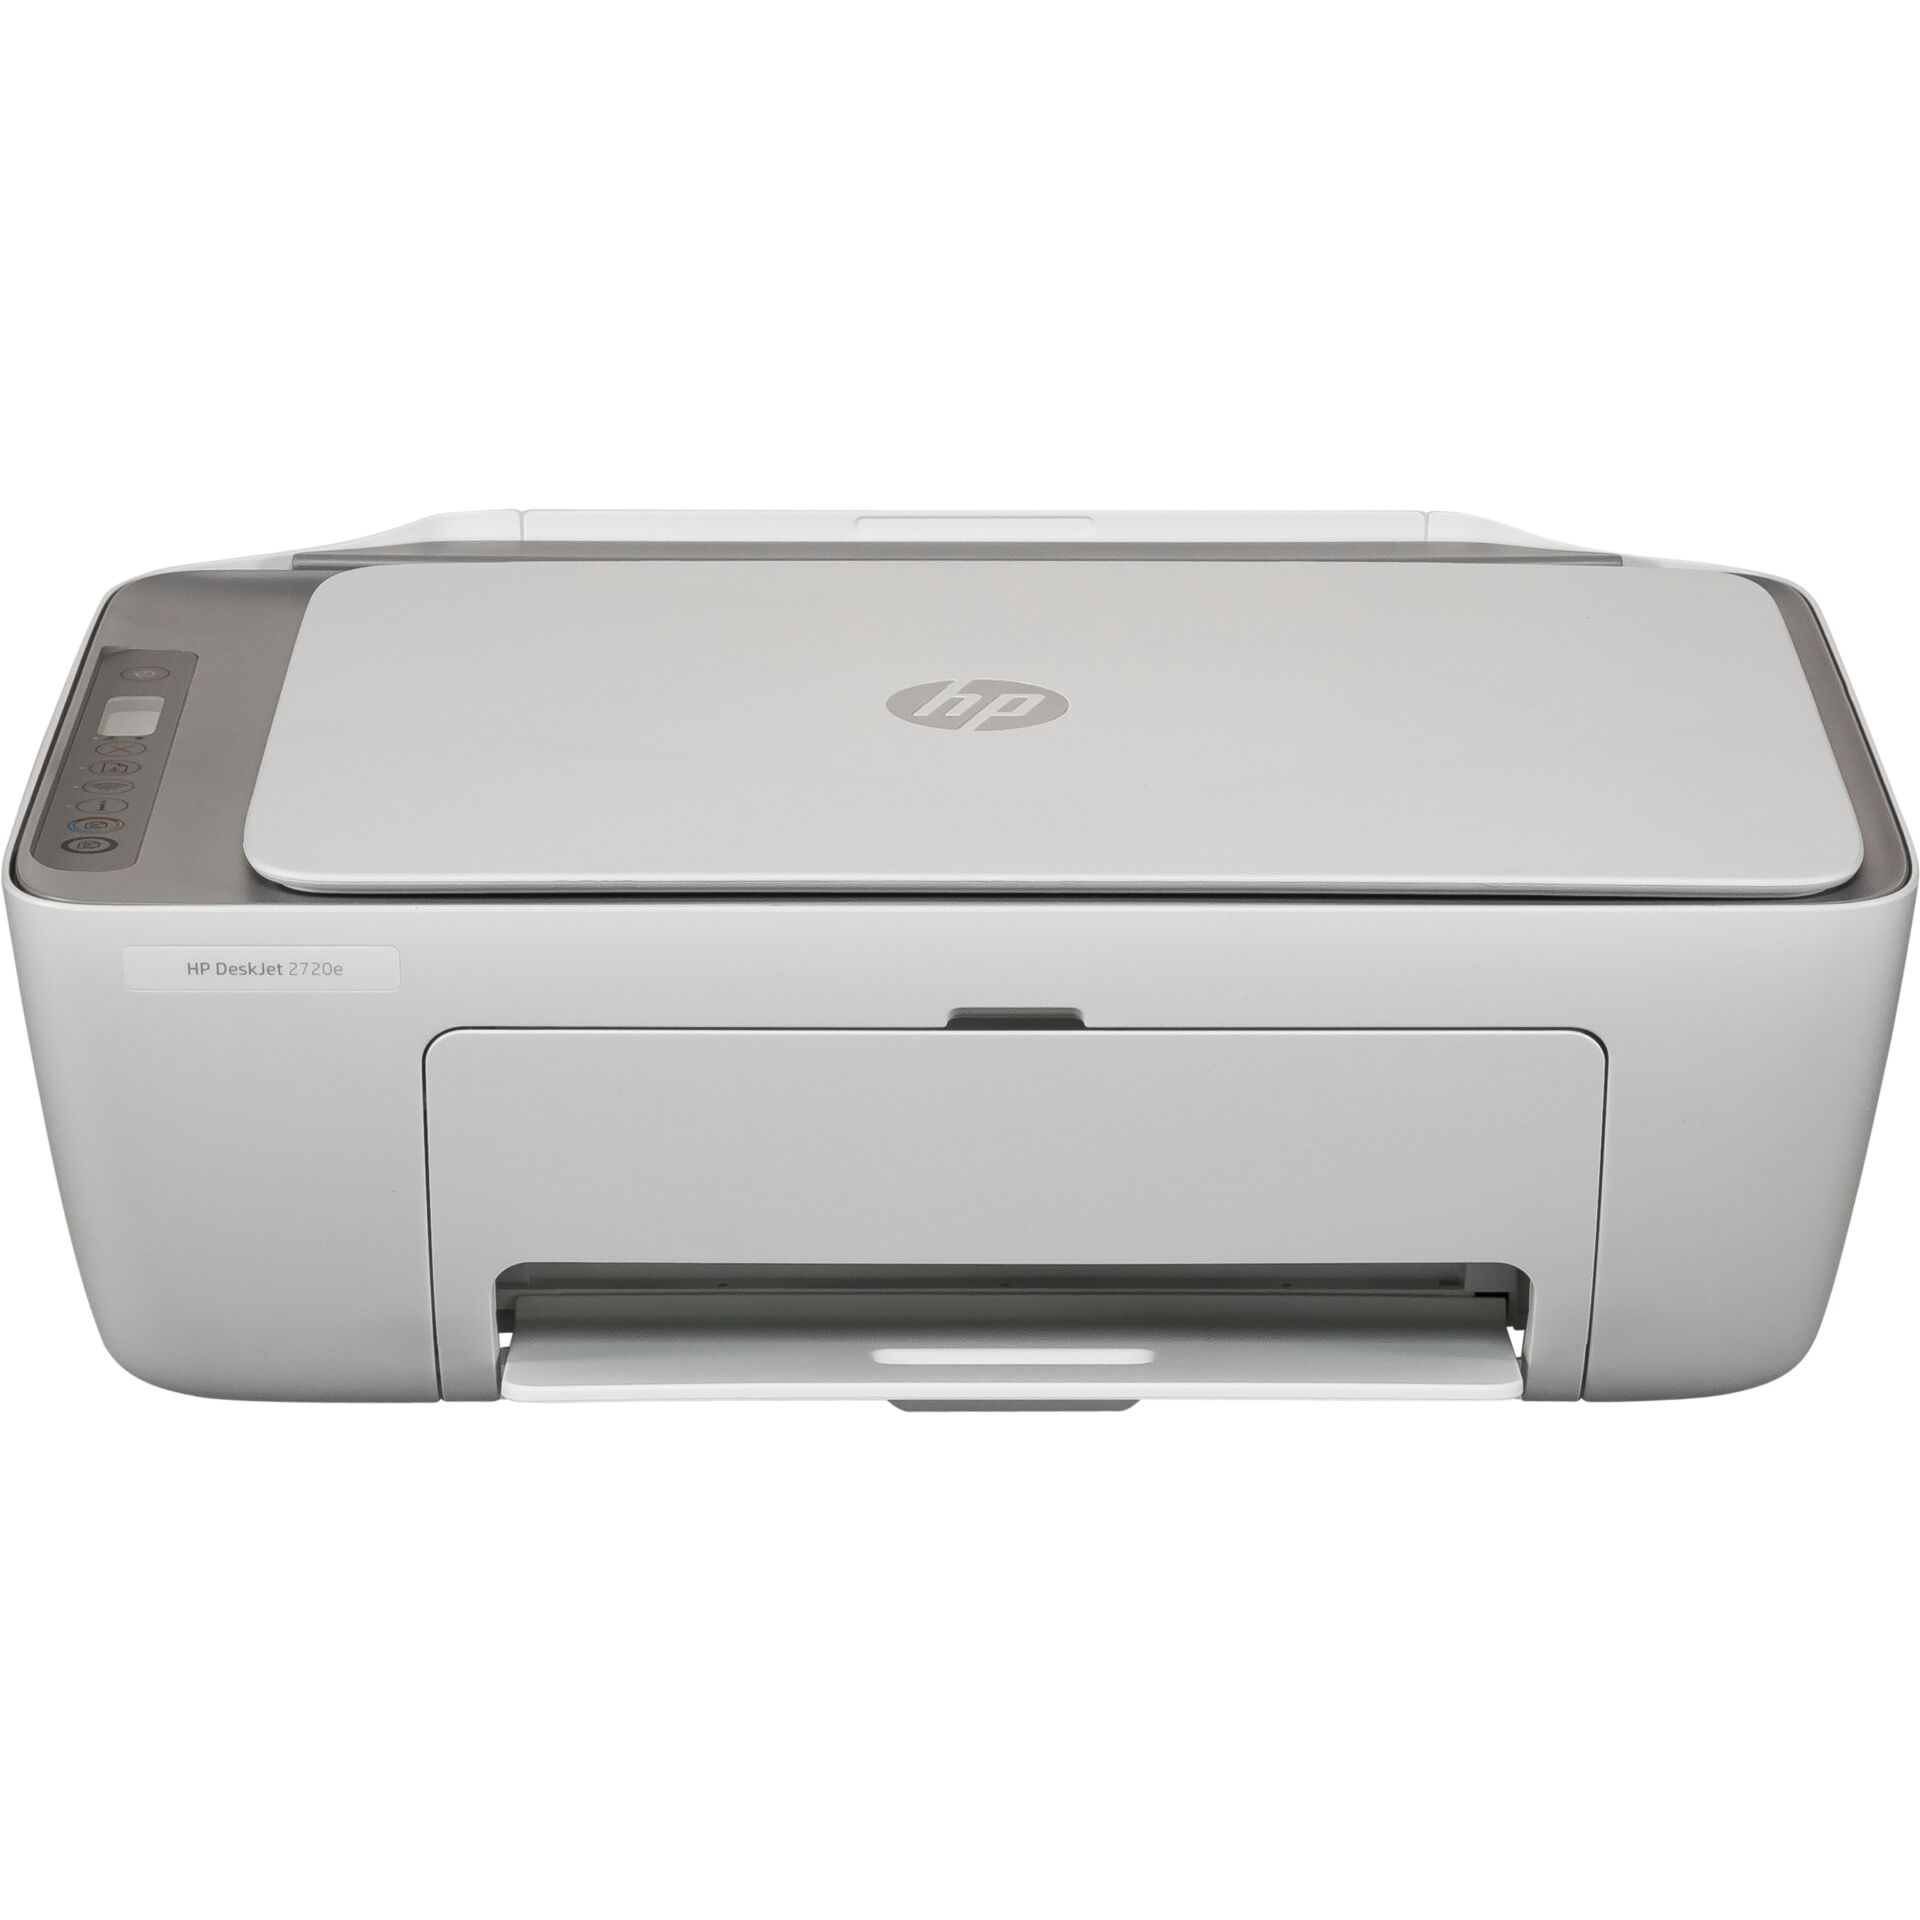 HP DeskJet 2720e All-in-One weiß, WLAN, Instant Ink, Tinte, mehrfarbig-Multifunktionsgerät, Drucker/ Scanner/ Kopierer